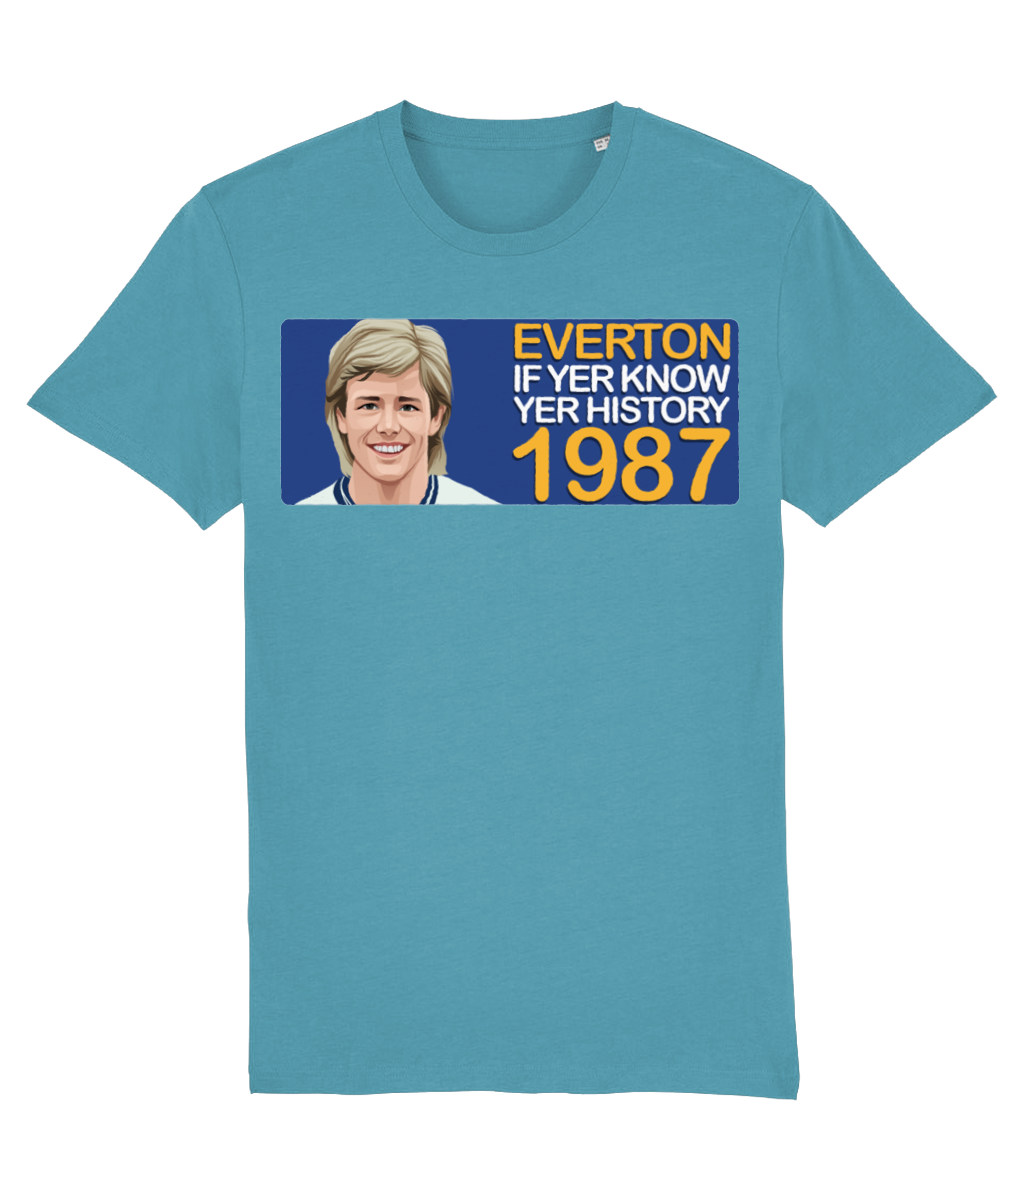 Everton 1987 Adrian Heath If Yer Know Yer History Unisex T-Shirt Stanley/Stella Retrotext Atlantic Blue XX-Small 